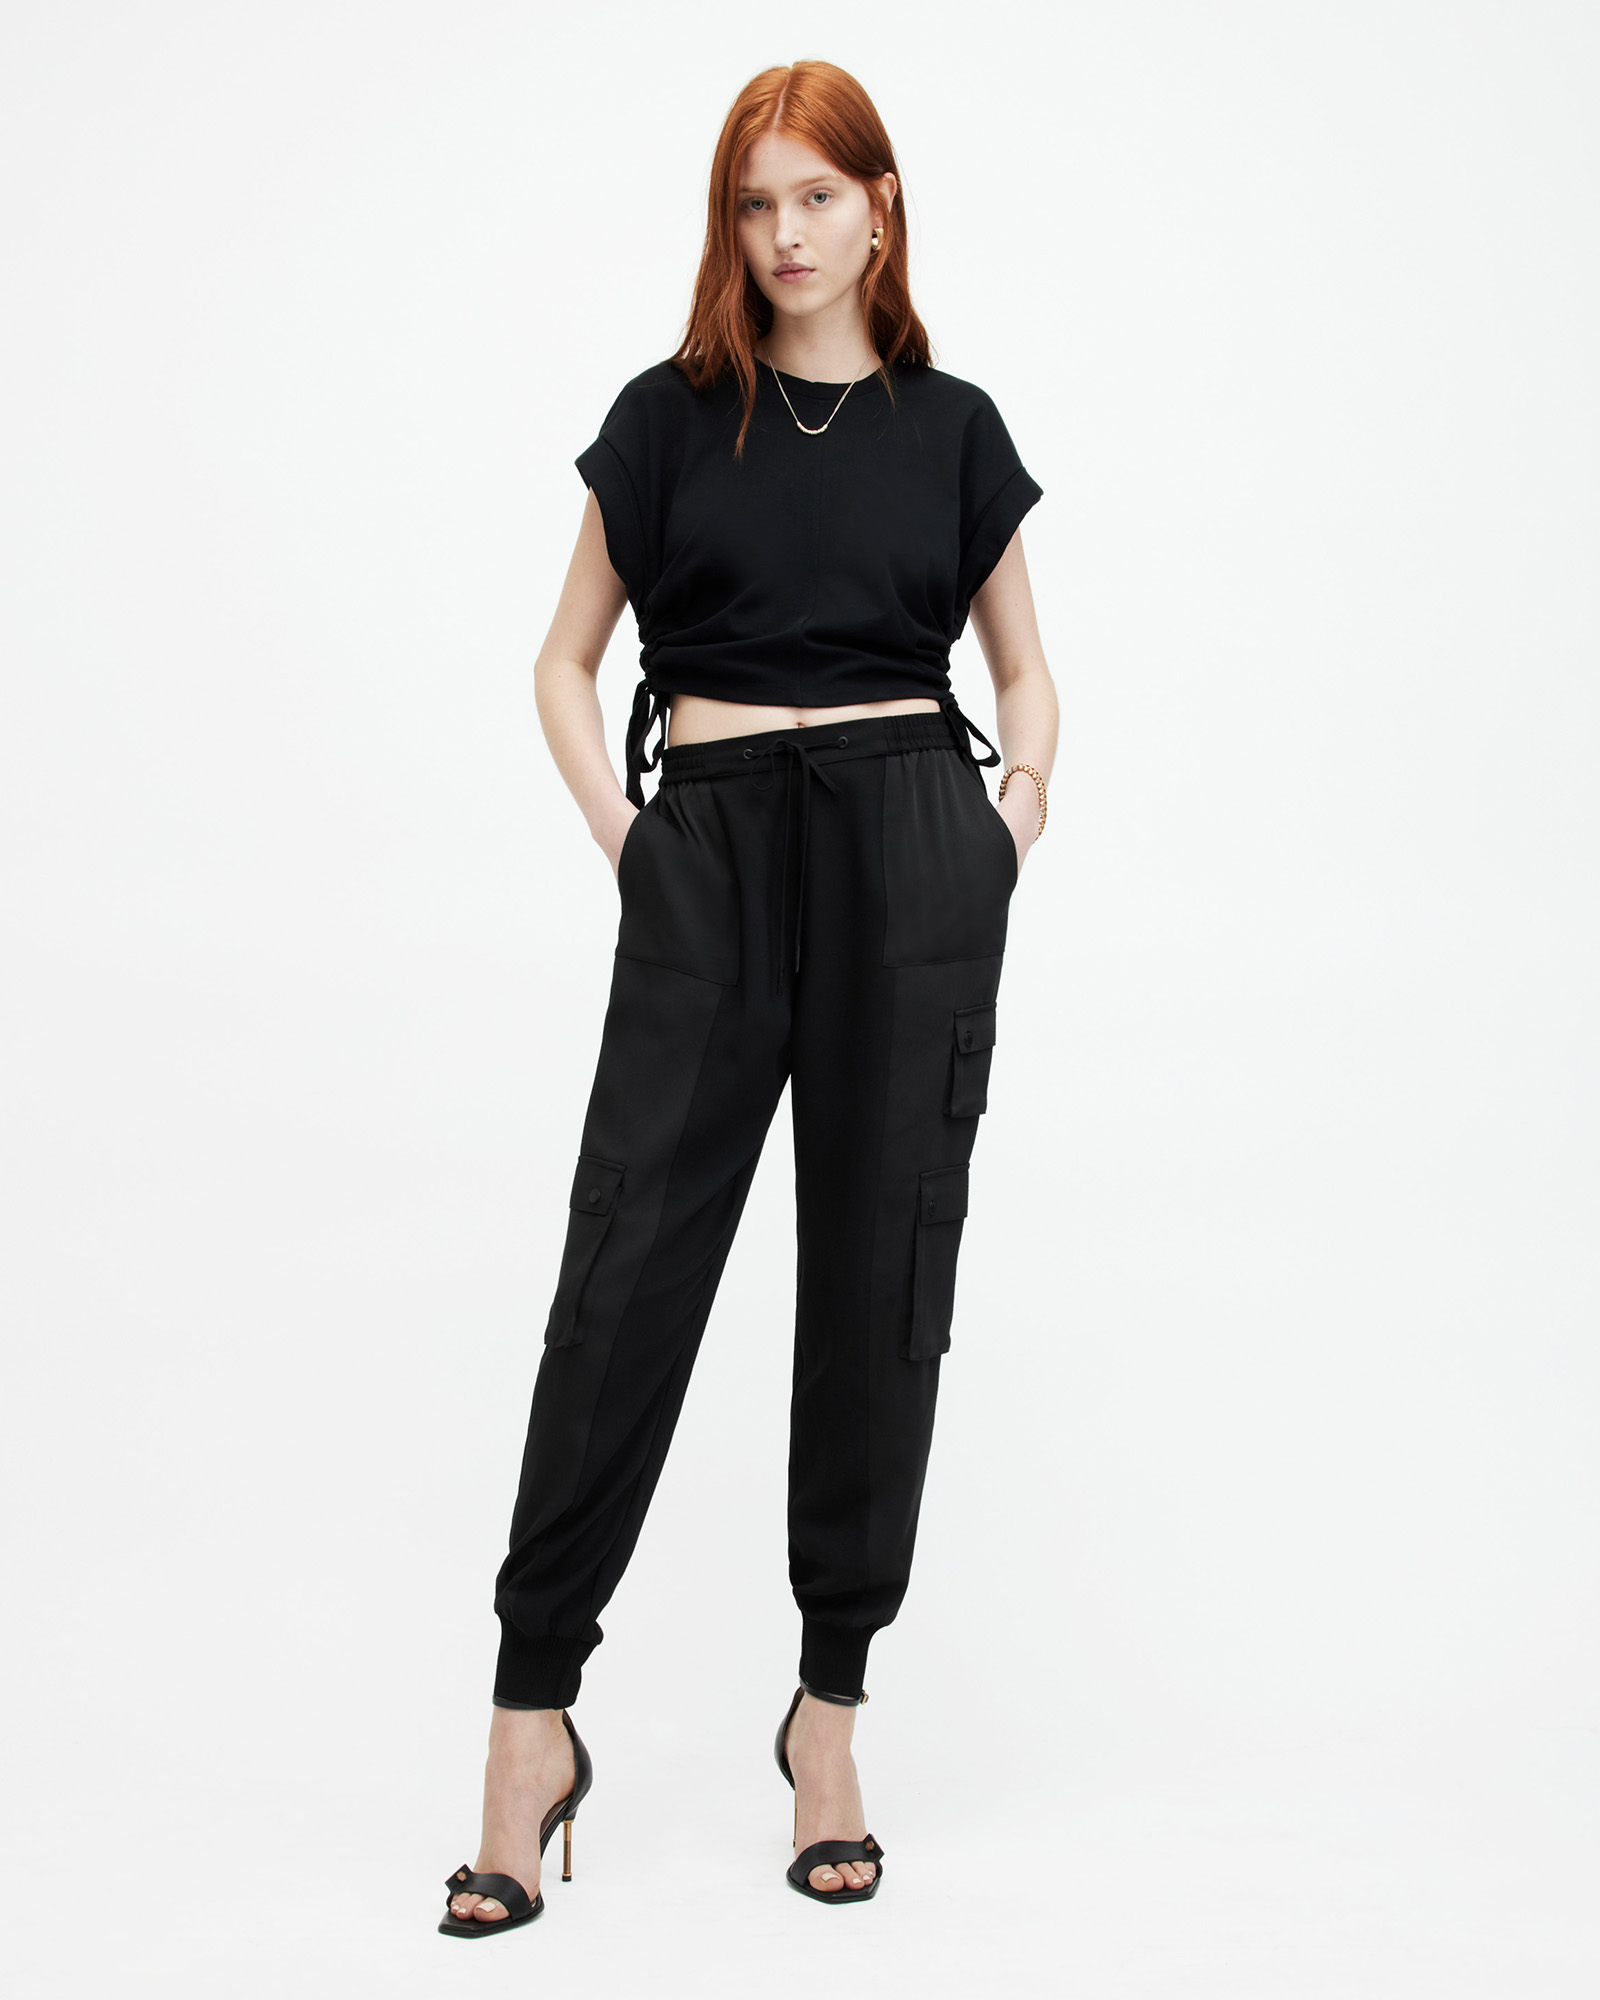 Buy Women Black Regular Fit Solid Casual Trousers Online - 261224